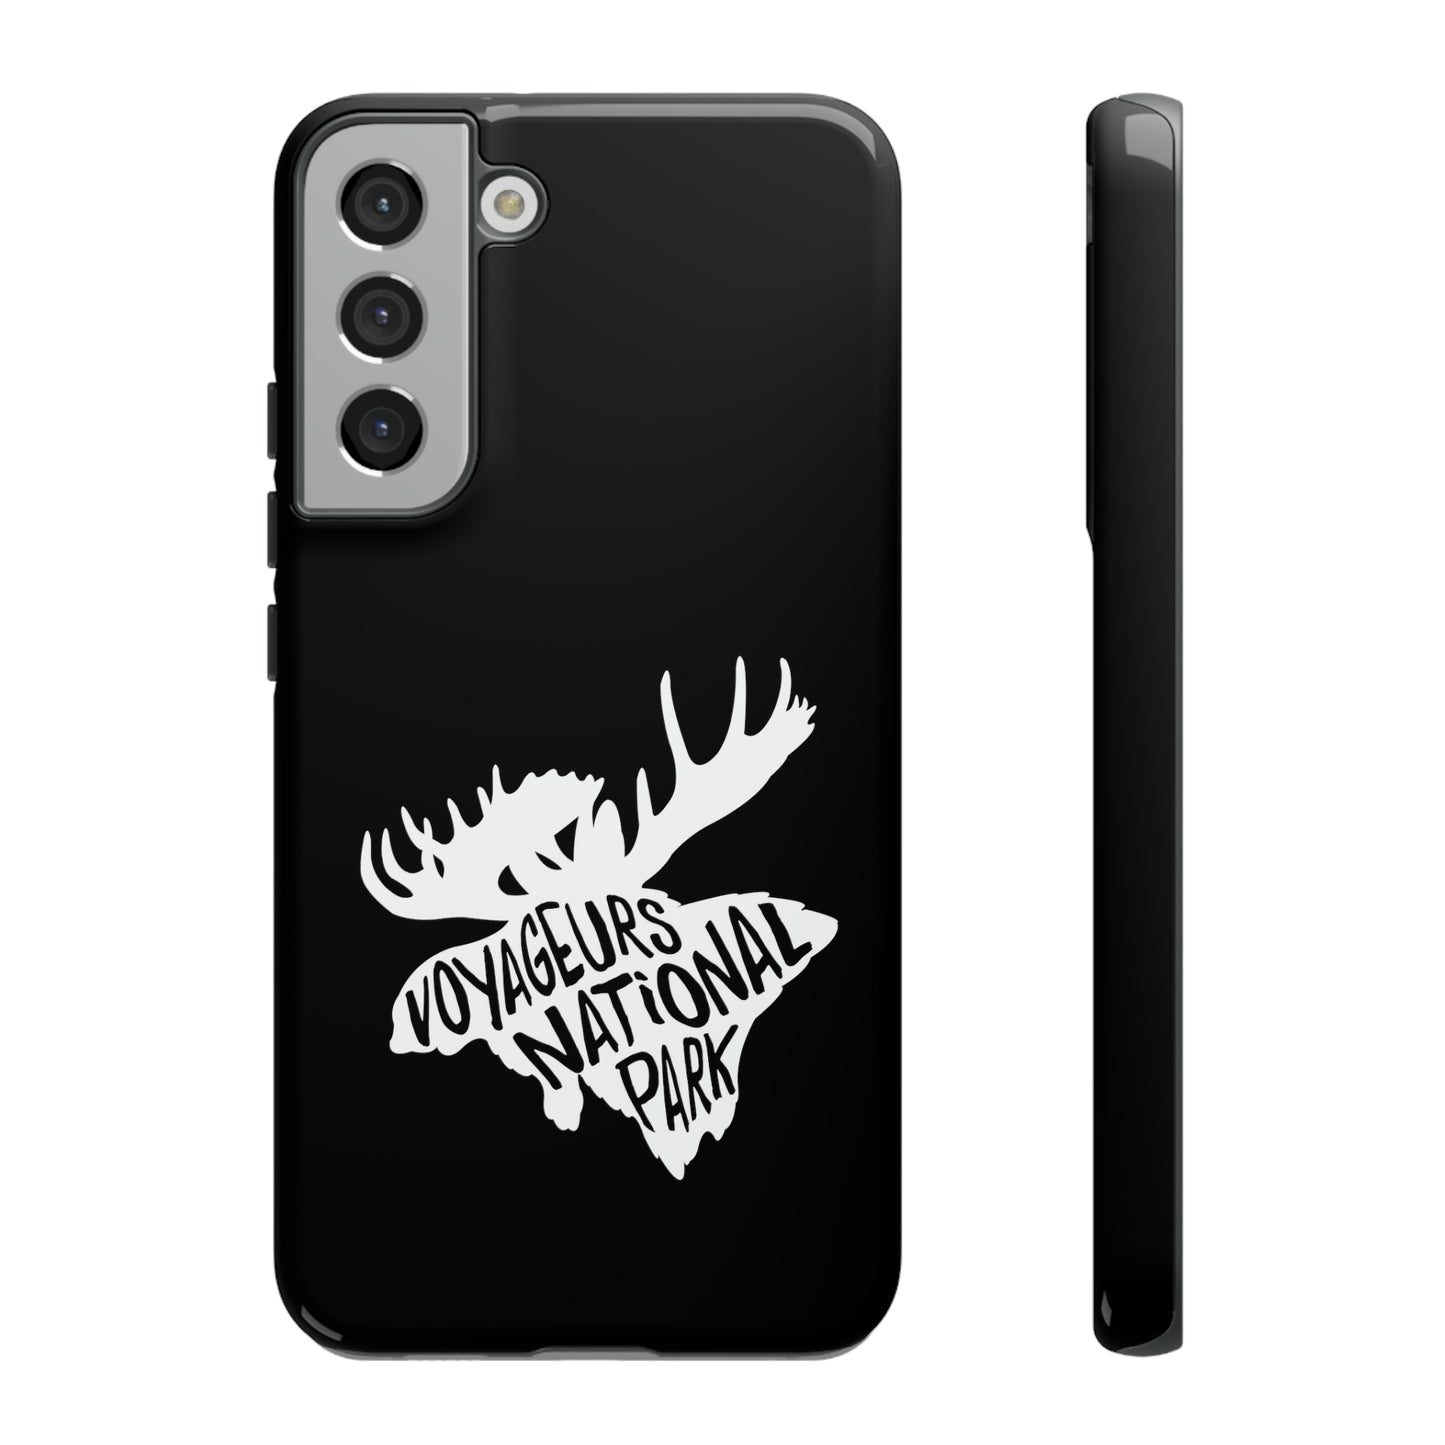 Voyageurs National Park iPhone Case - Moose Design